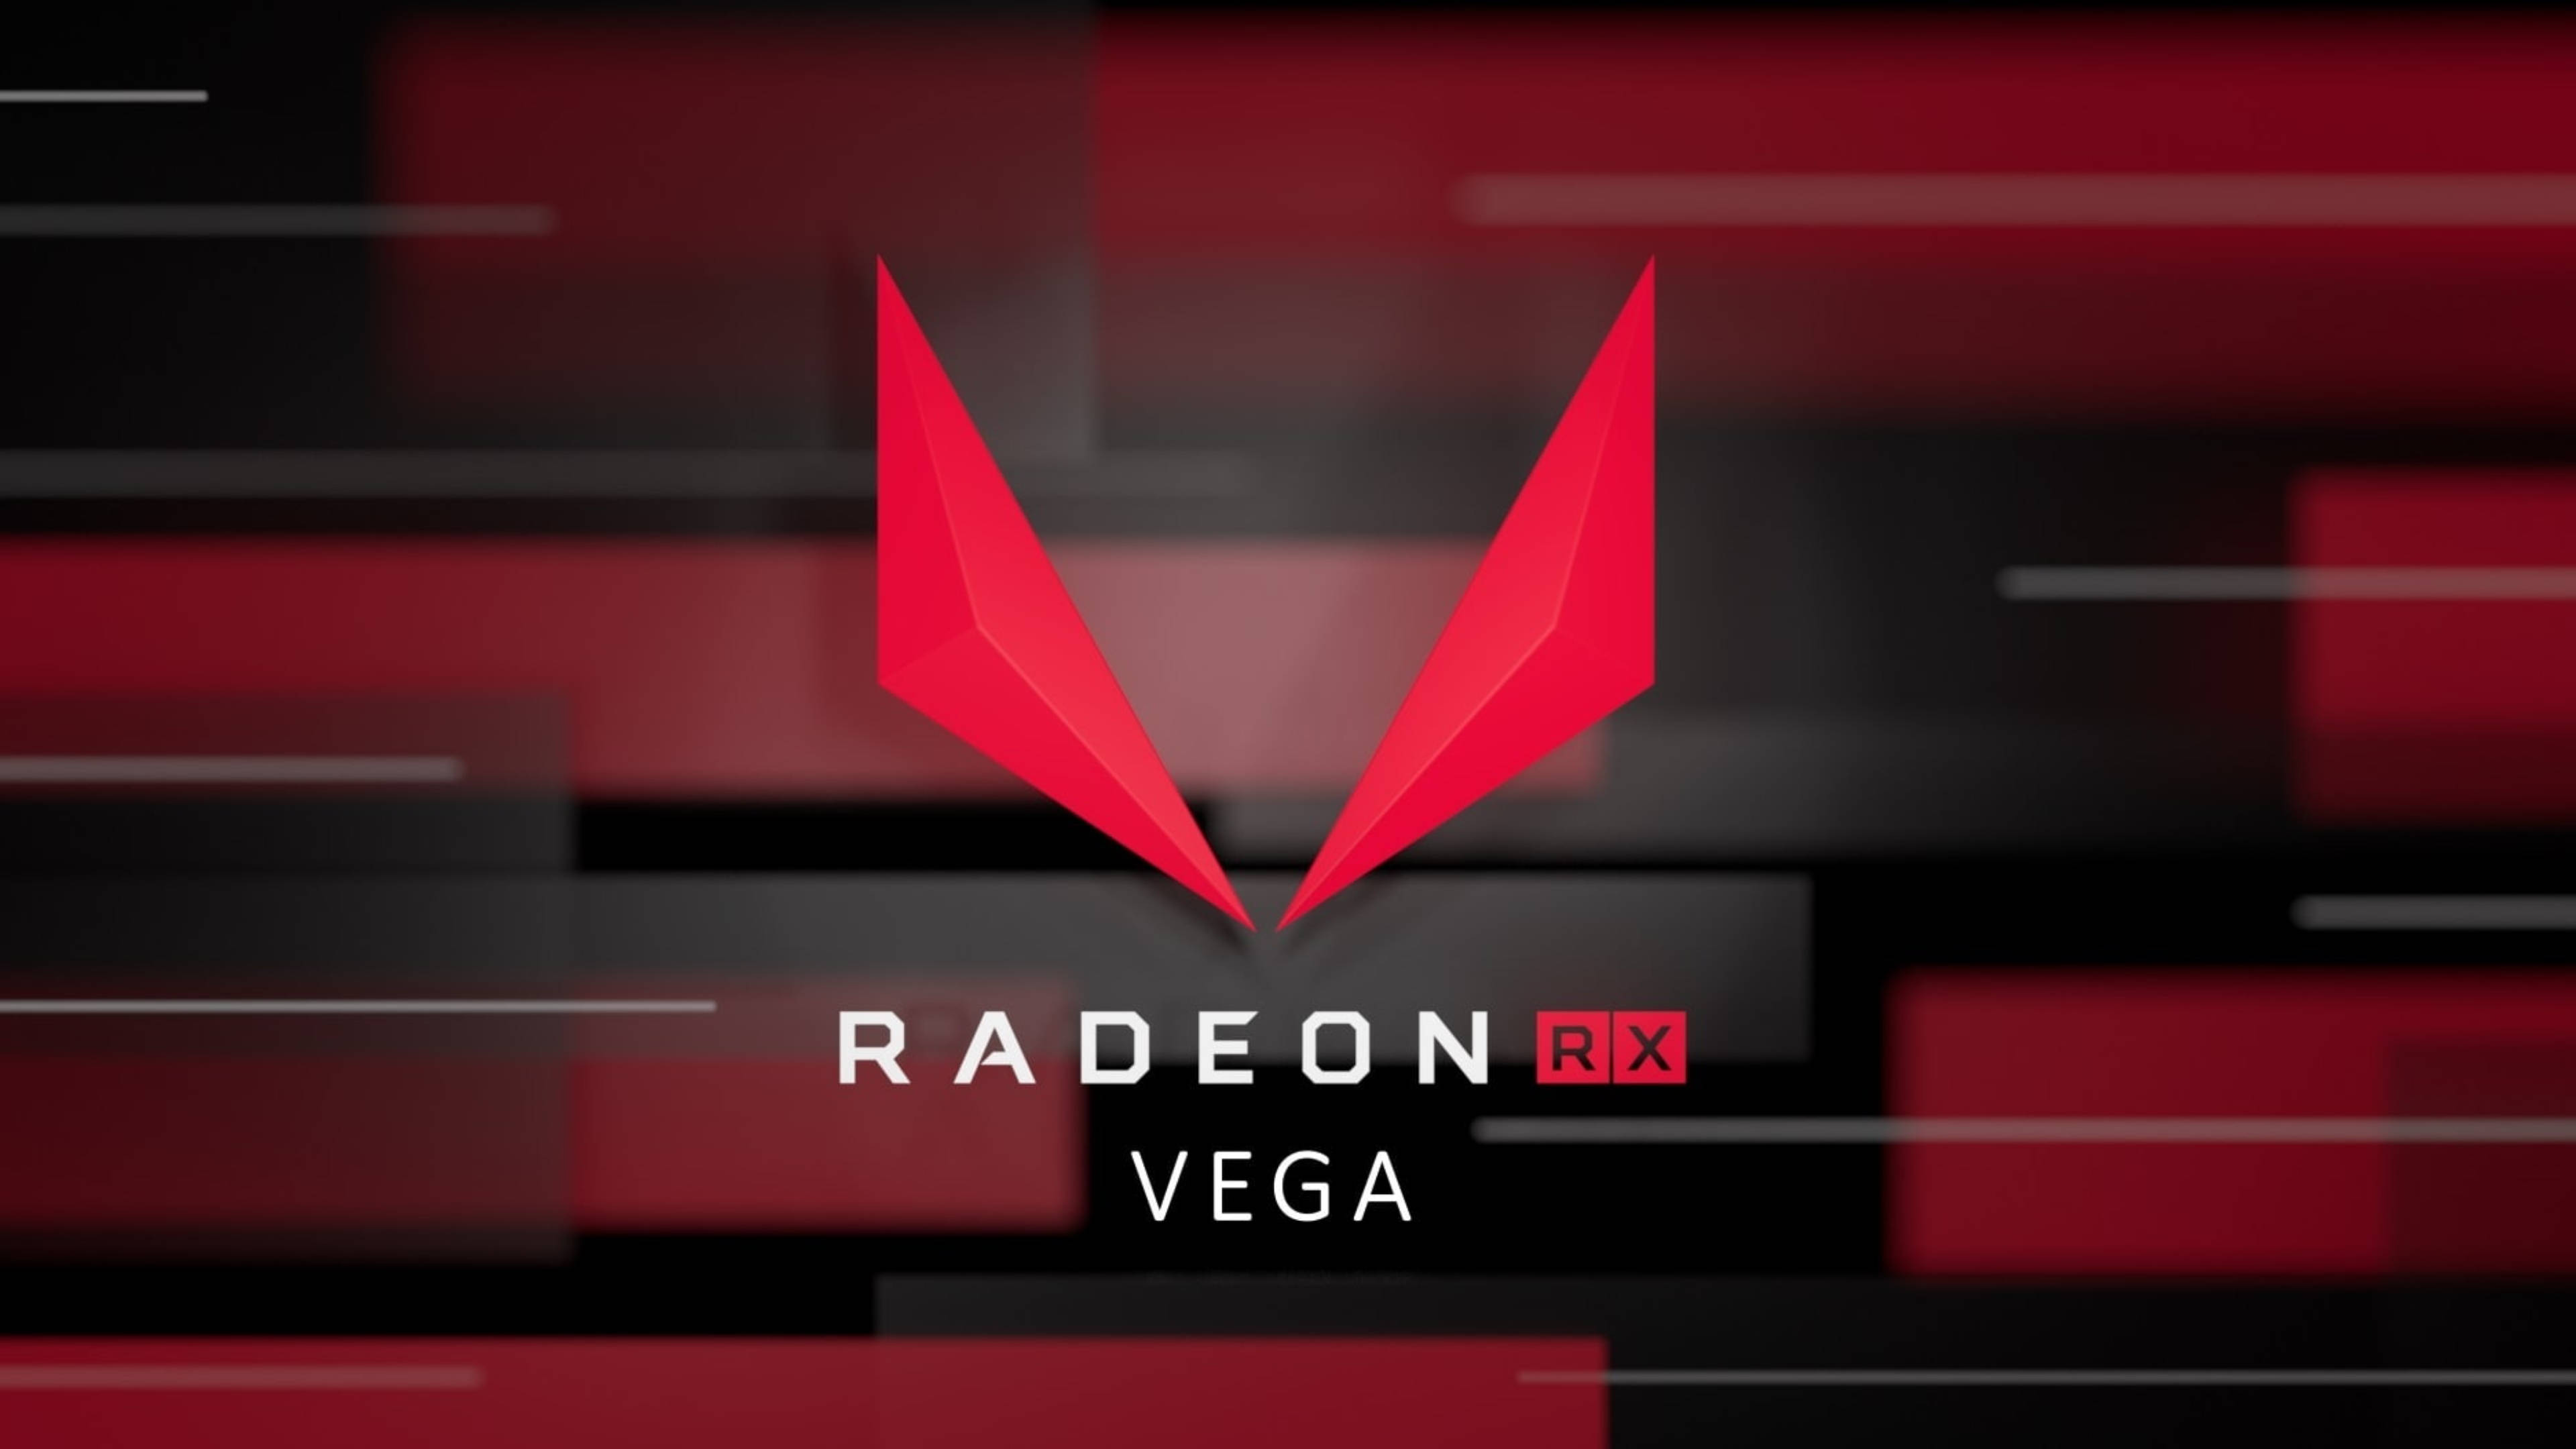 Amd Vega Radeon 4k Wallpaper